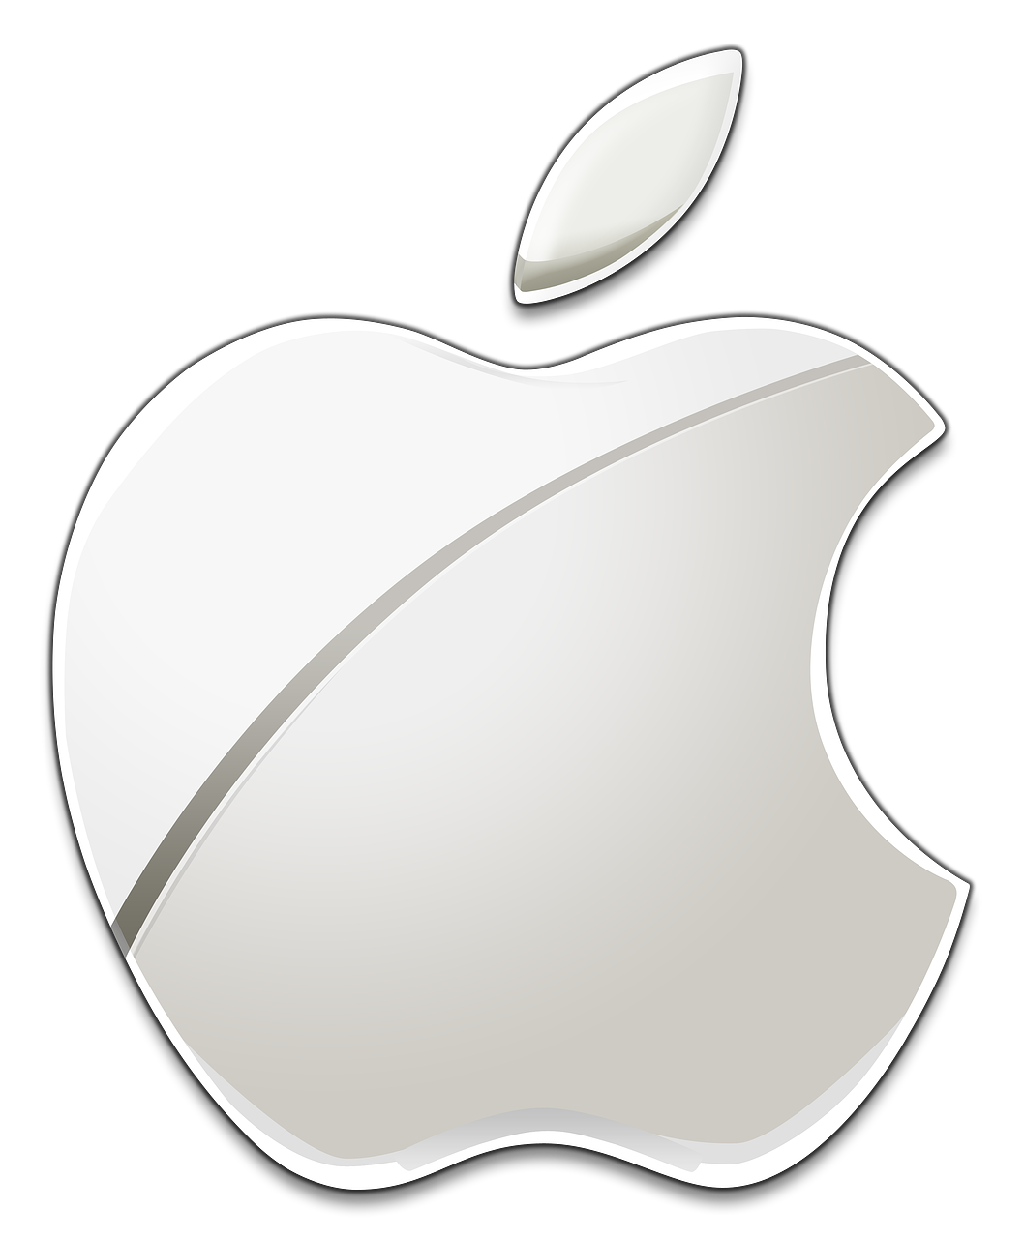 Apple Ios Logo PNG Transparent Apple Ios Logo.PNG Images ...